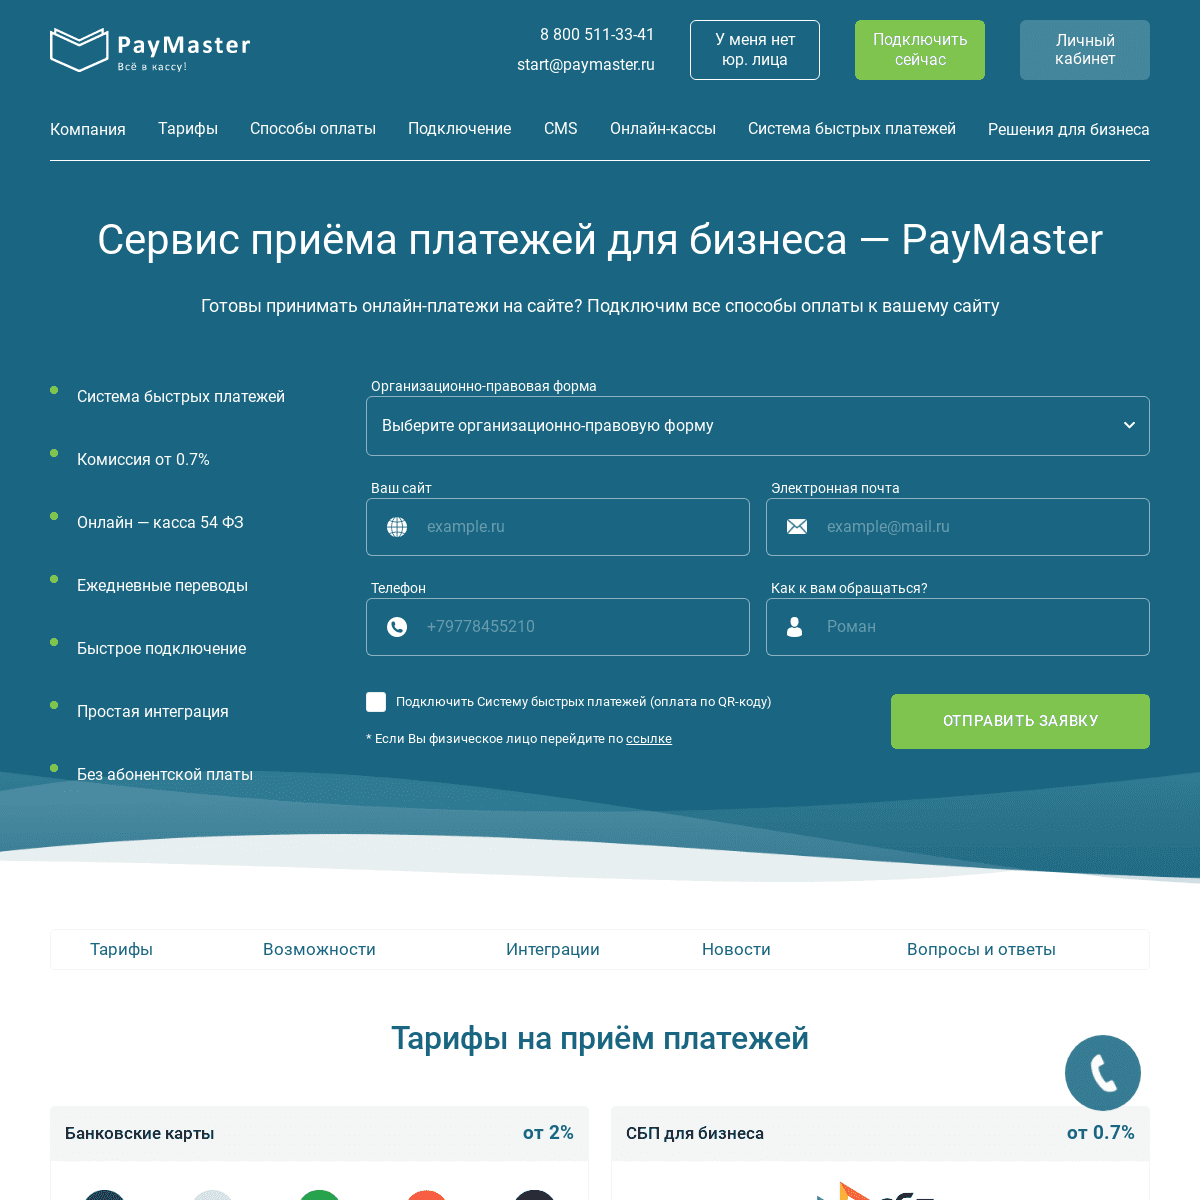 A complete backup of https://paymaster.ru